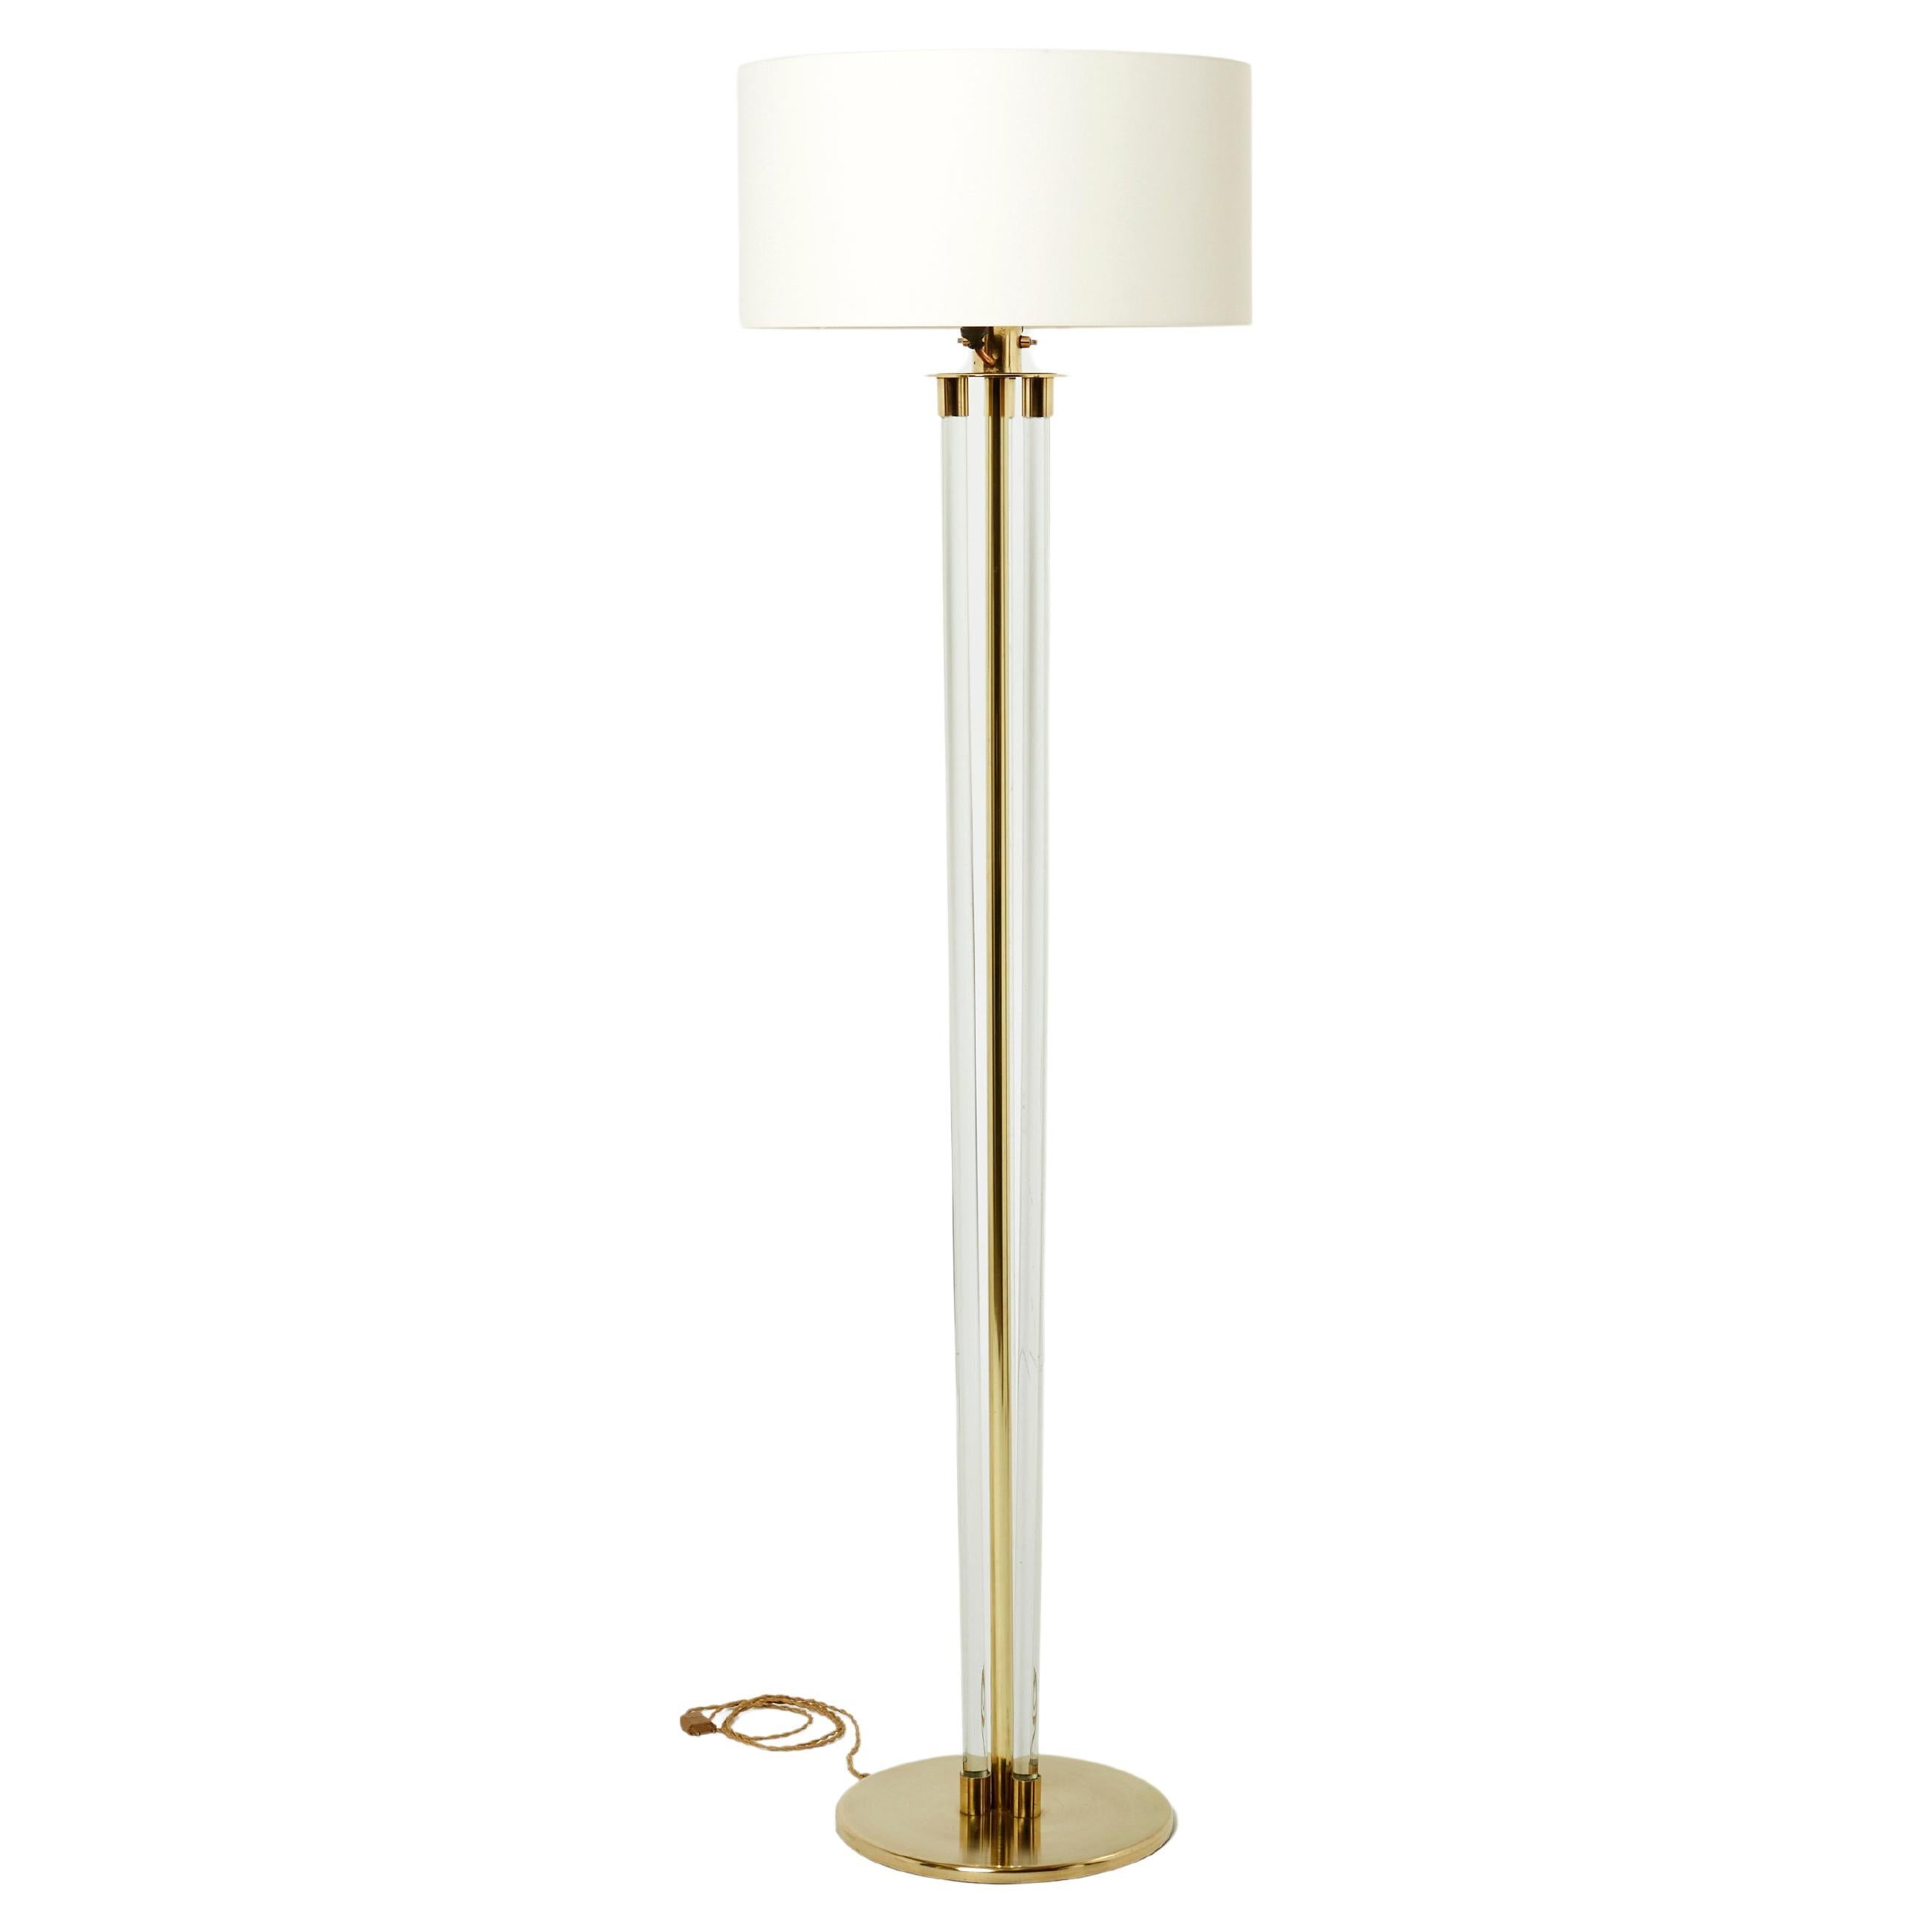 Jacques Adnet modernist lucite brass floor lamp 1950s For Sale